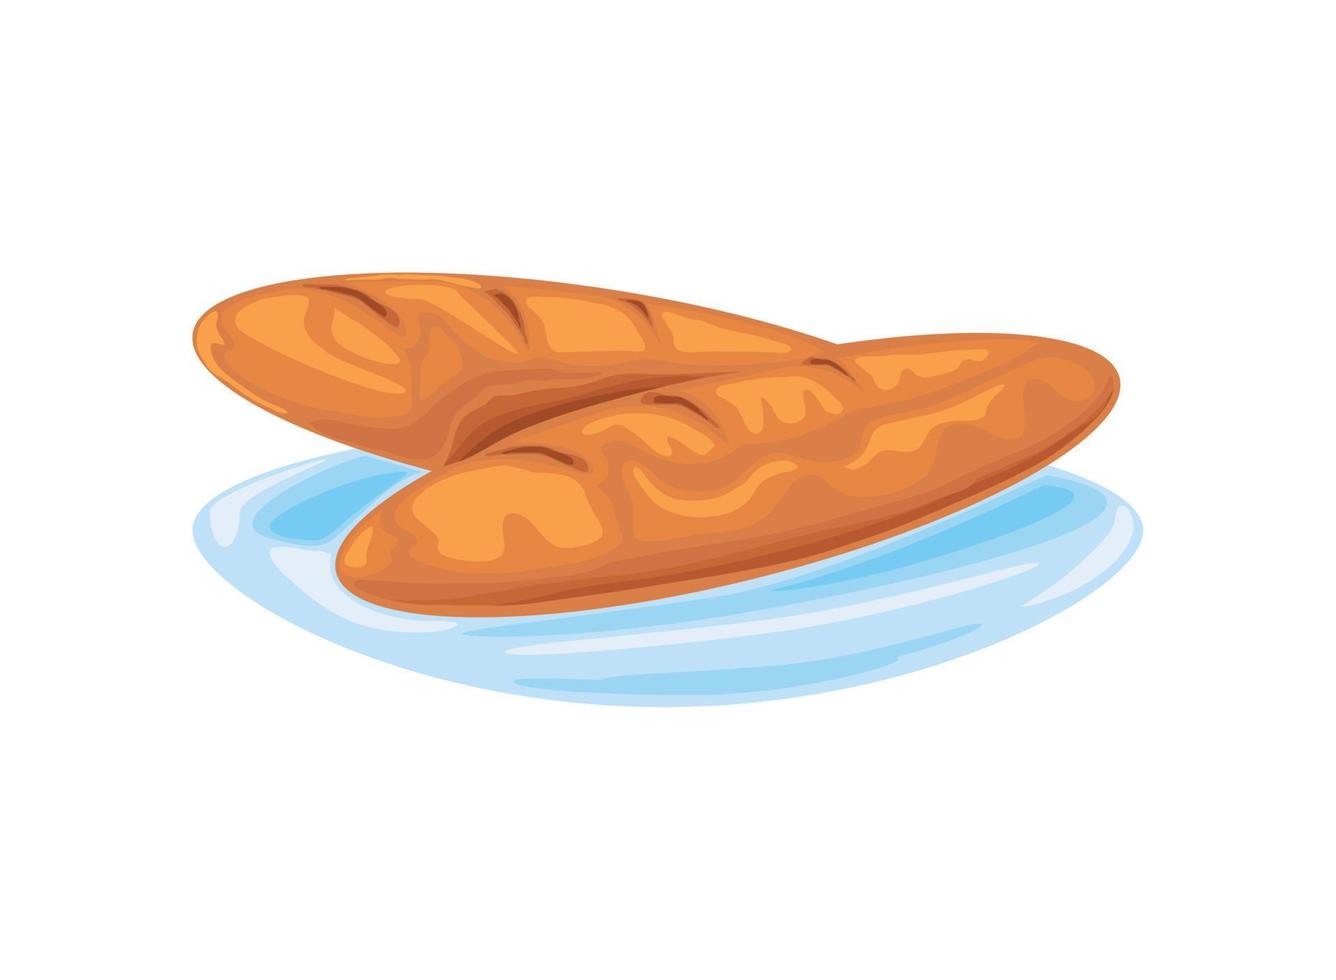 bread in dish icon vector